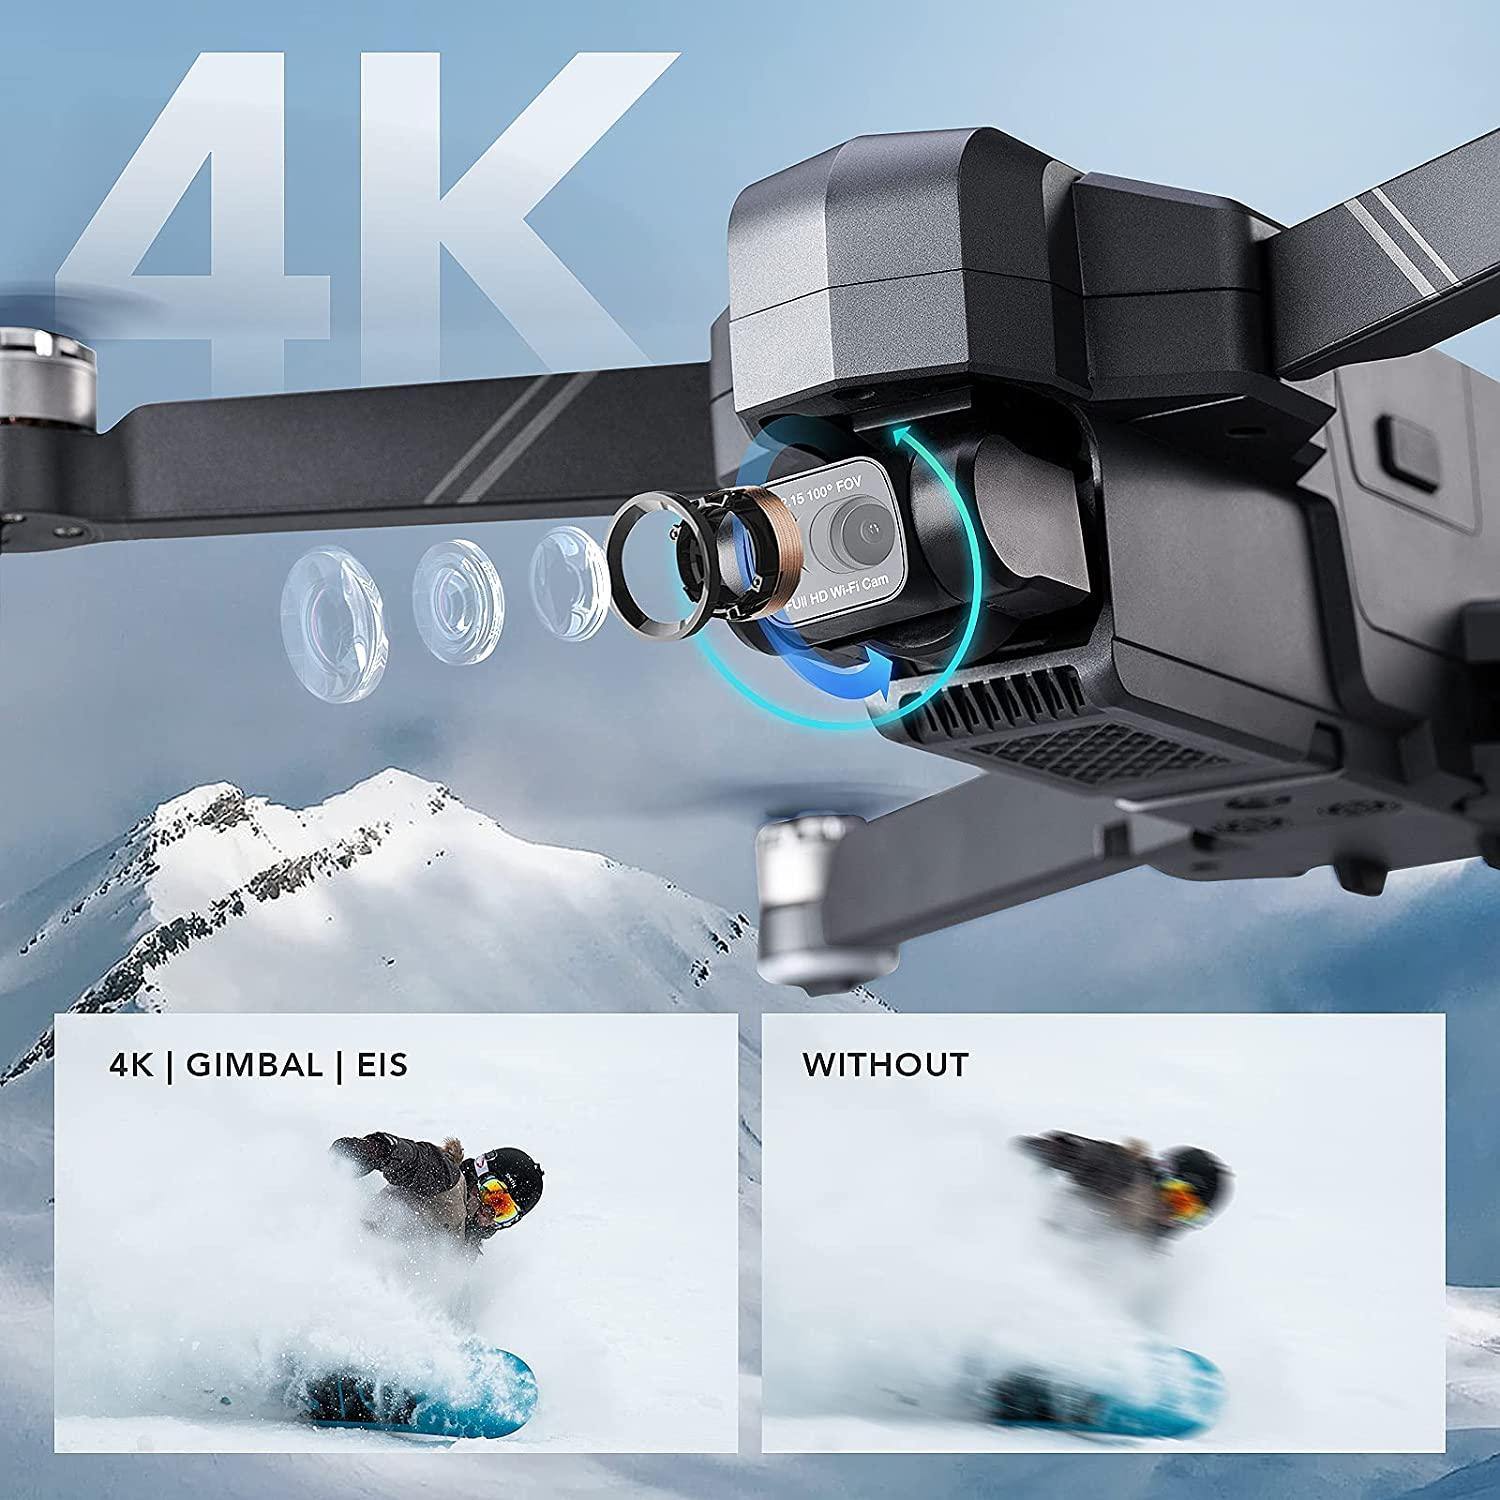 Ruko F11 GIM2 Drone - 4K HD Camera for Adults, 9800ft Video Transmissi –  RCDrone